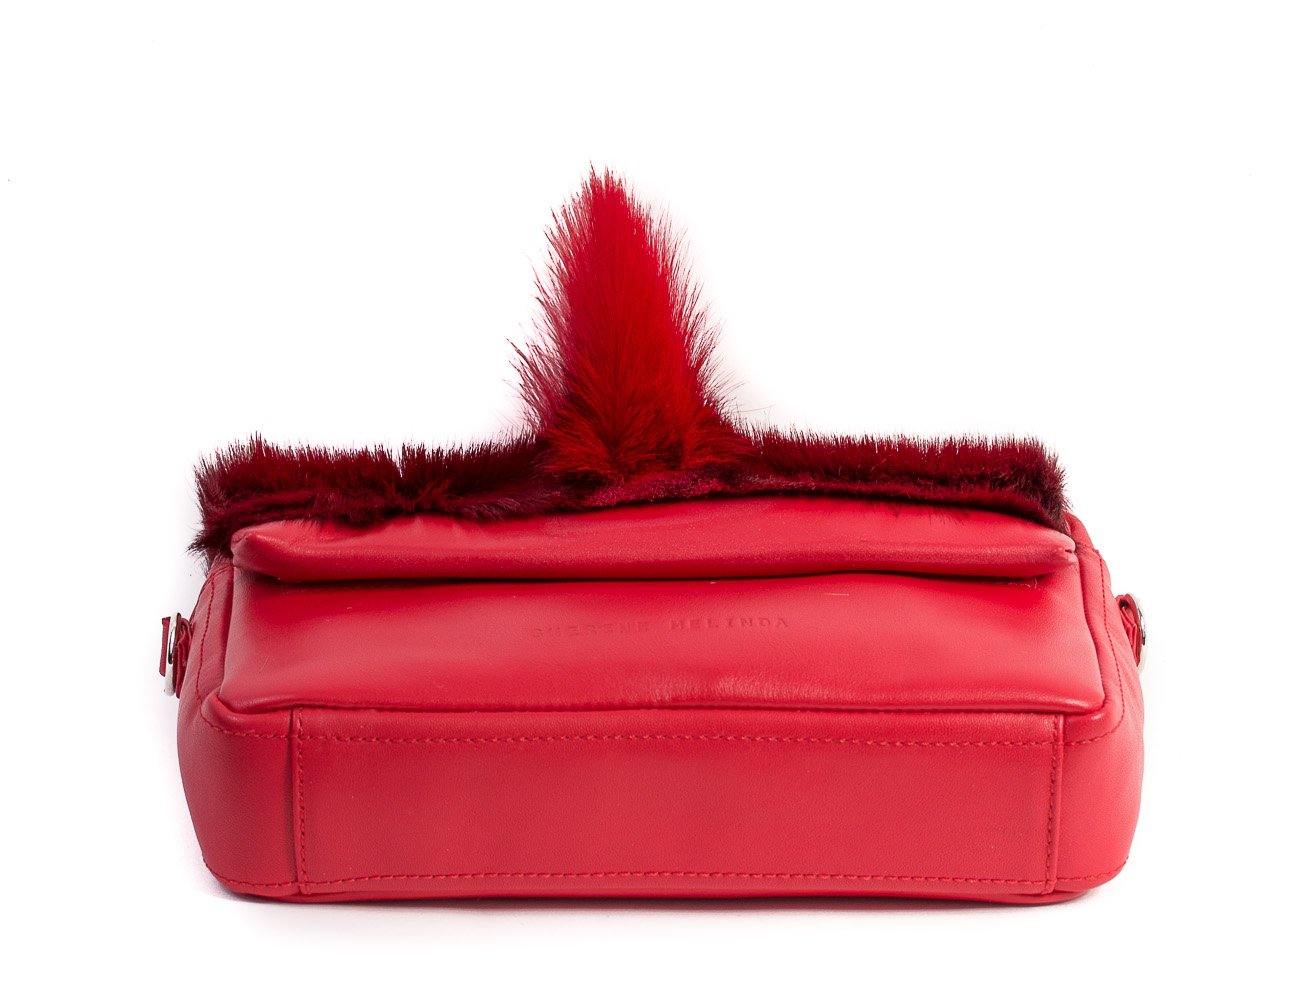 sherene melinda springbok hair-on-hide red leather shoulder bag Fan bottom